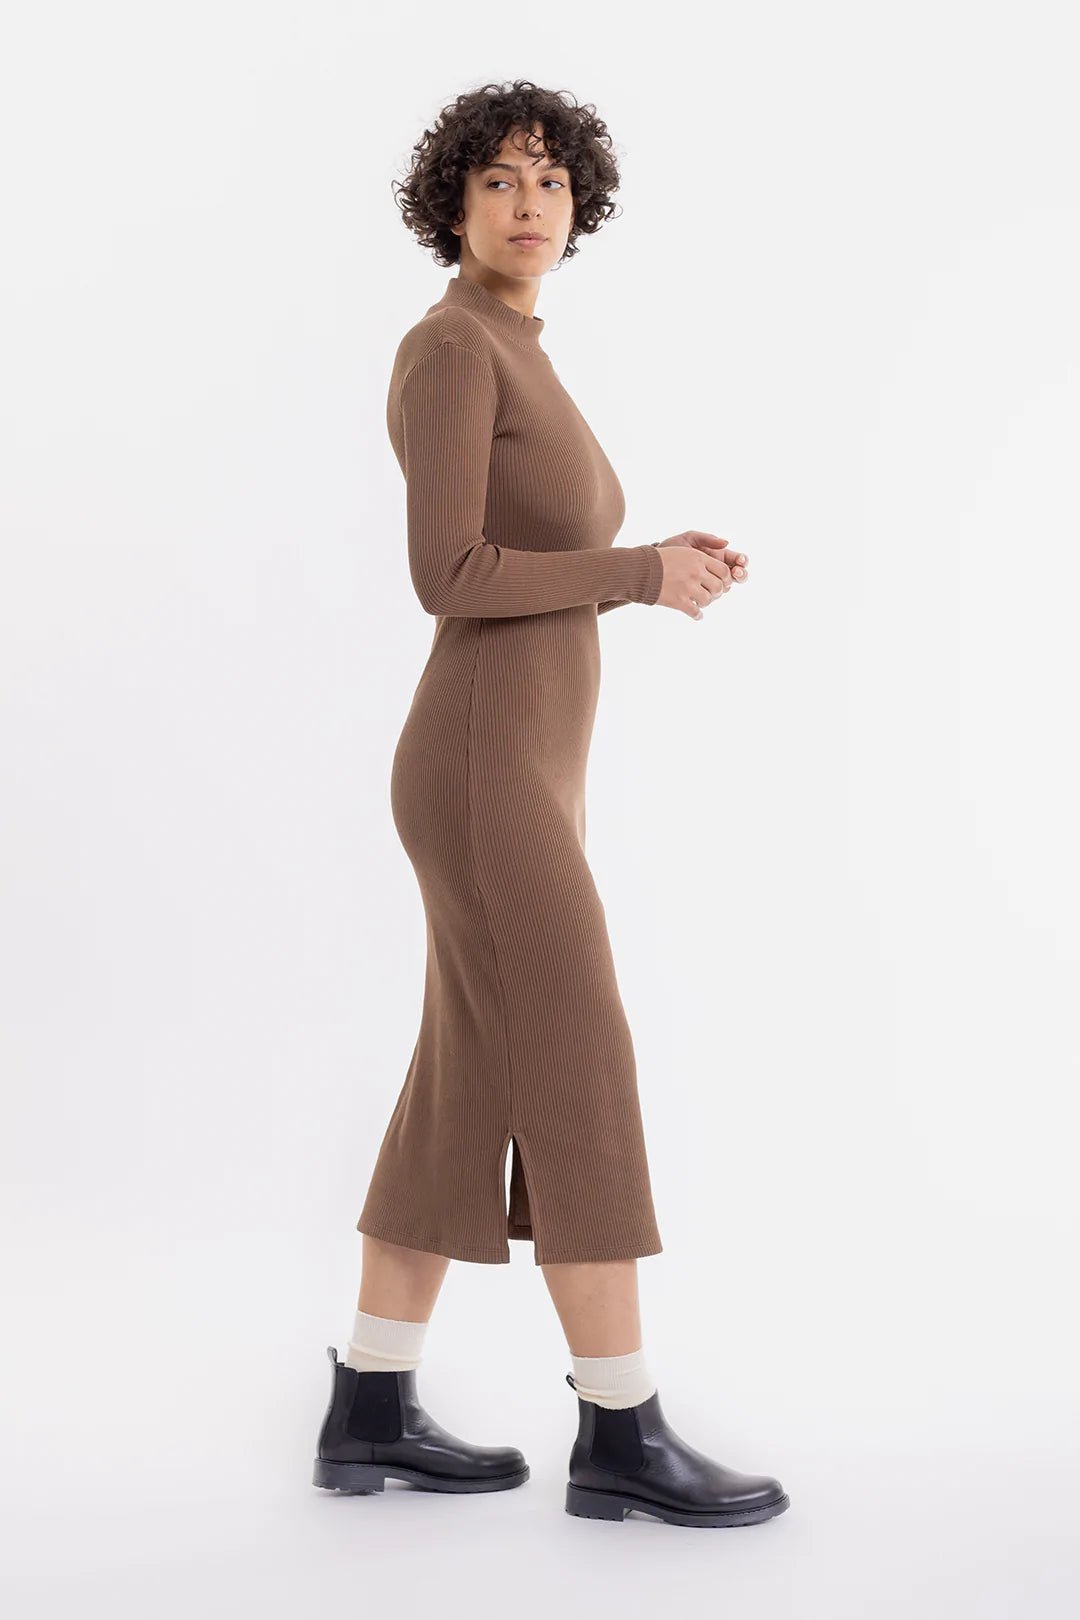 Rollkragen Kleid aus Rippenstrick - Rotholz - MALA - The Concept Store